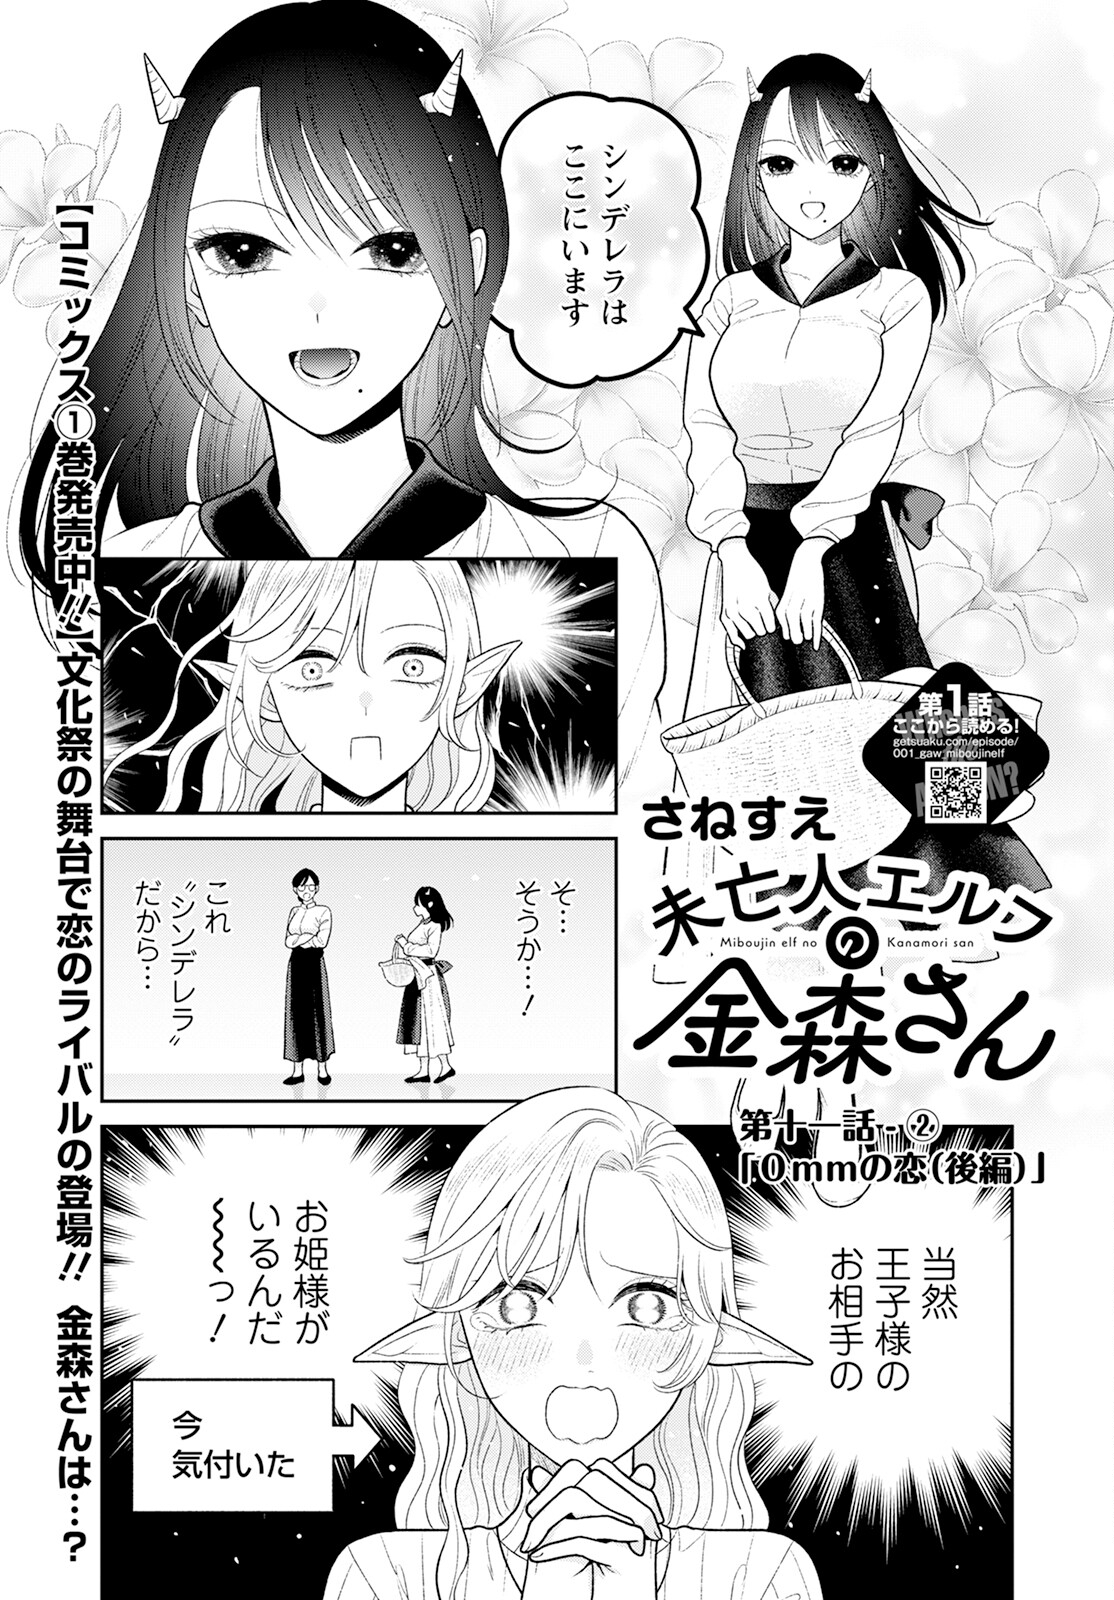 Miboujin Elf no Kanamori-san - Chapter 11.2 - Page 1